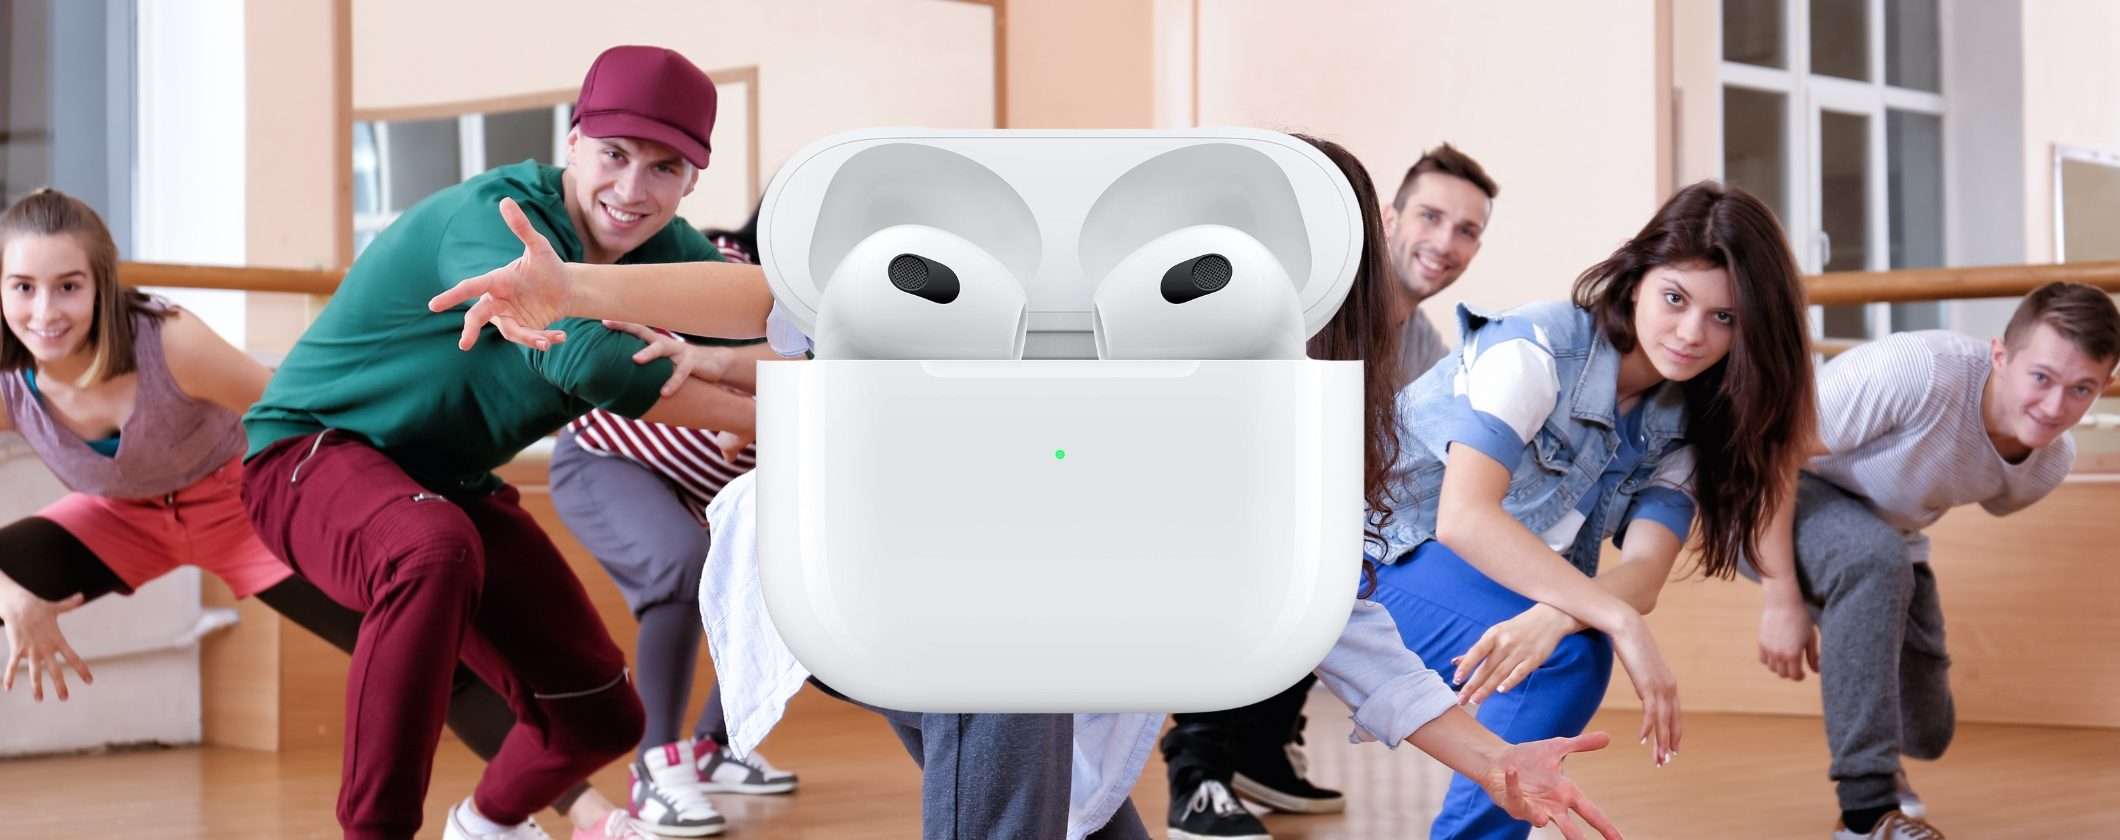 Apple AirPods 3 MagSafe a soli 180€: OFFERTA lampo su Amazon